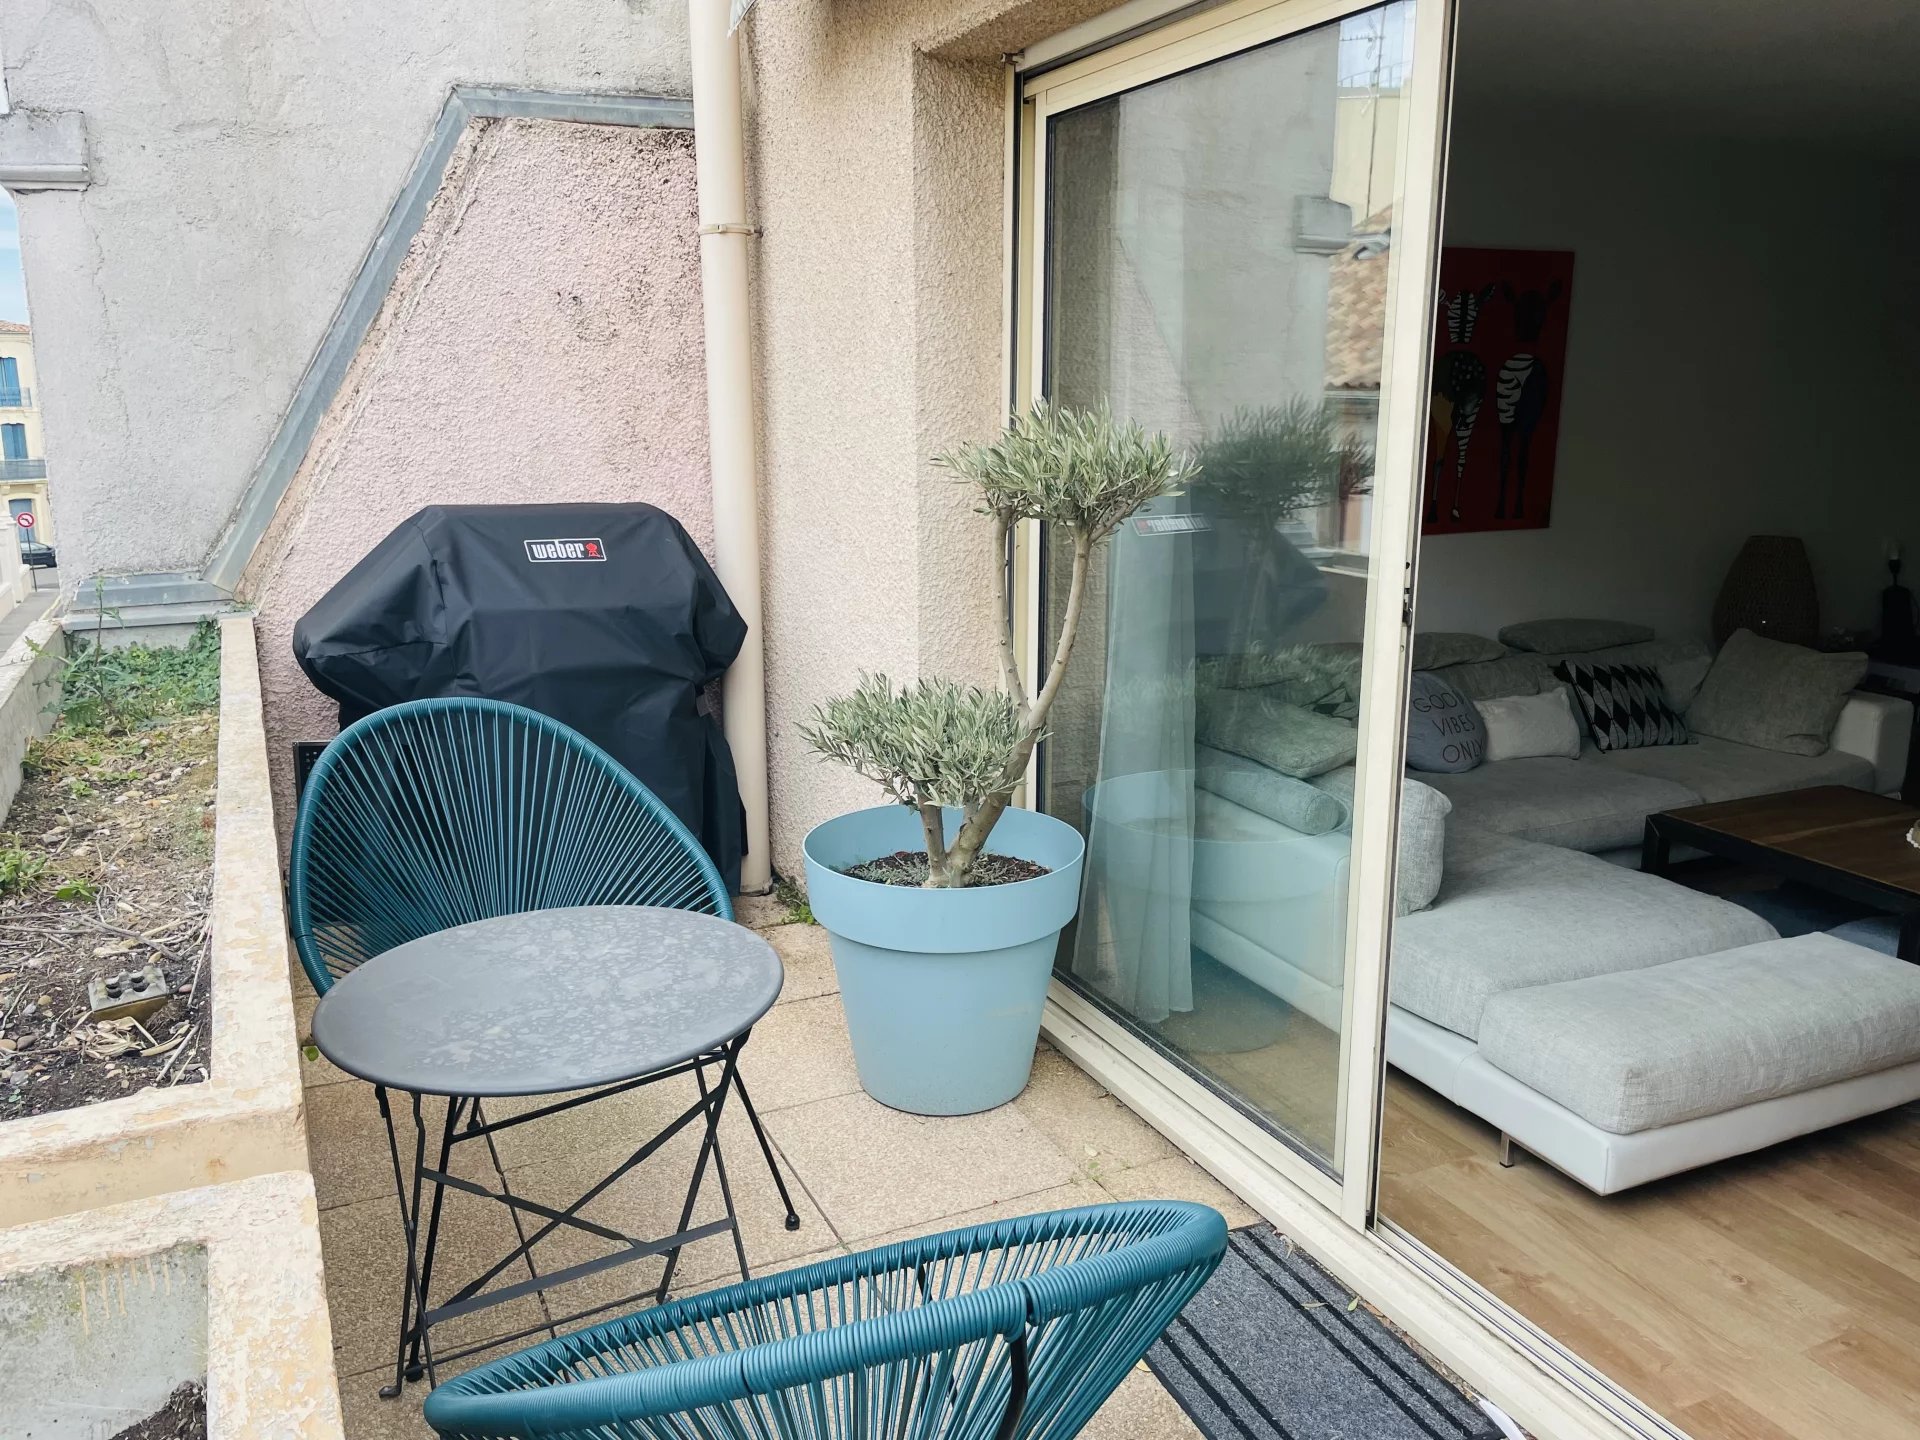 Sale Apartment - Narbonne